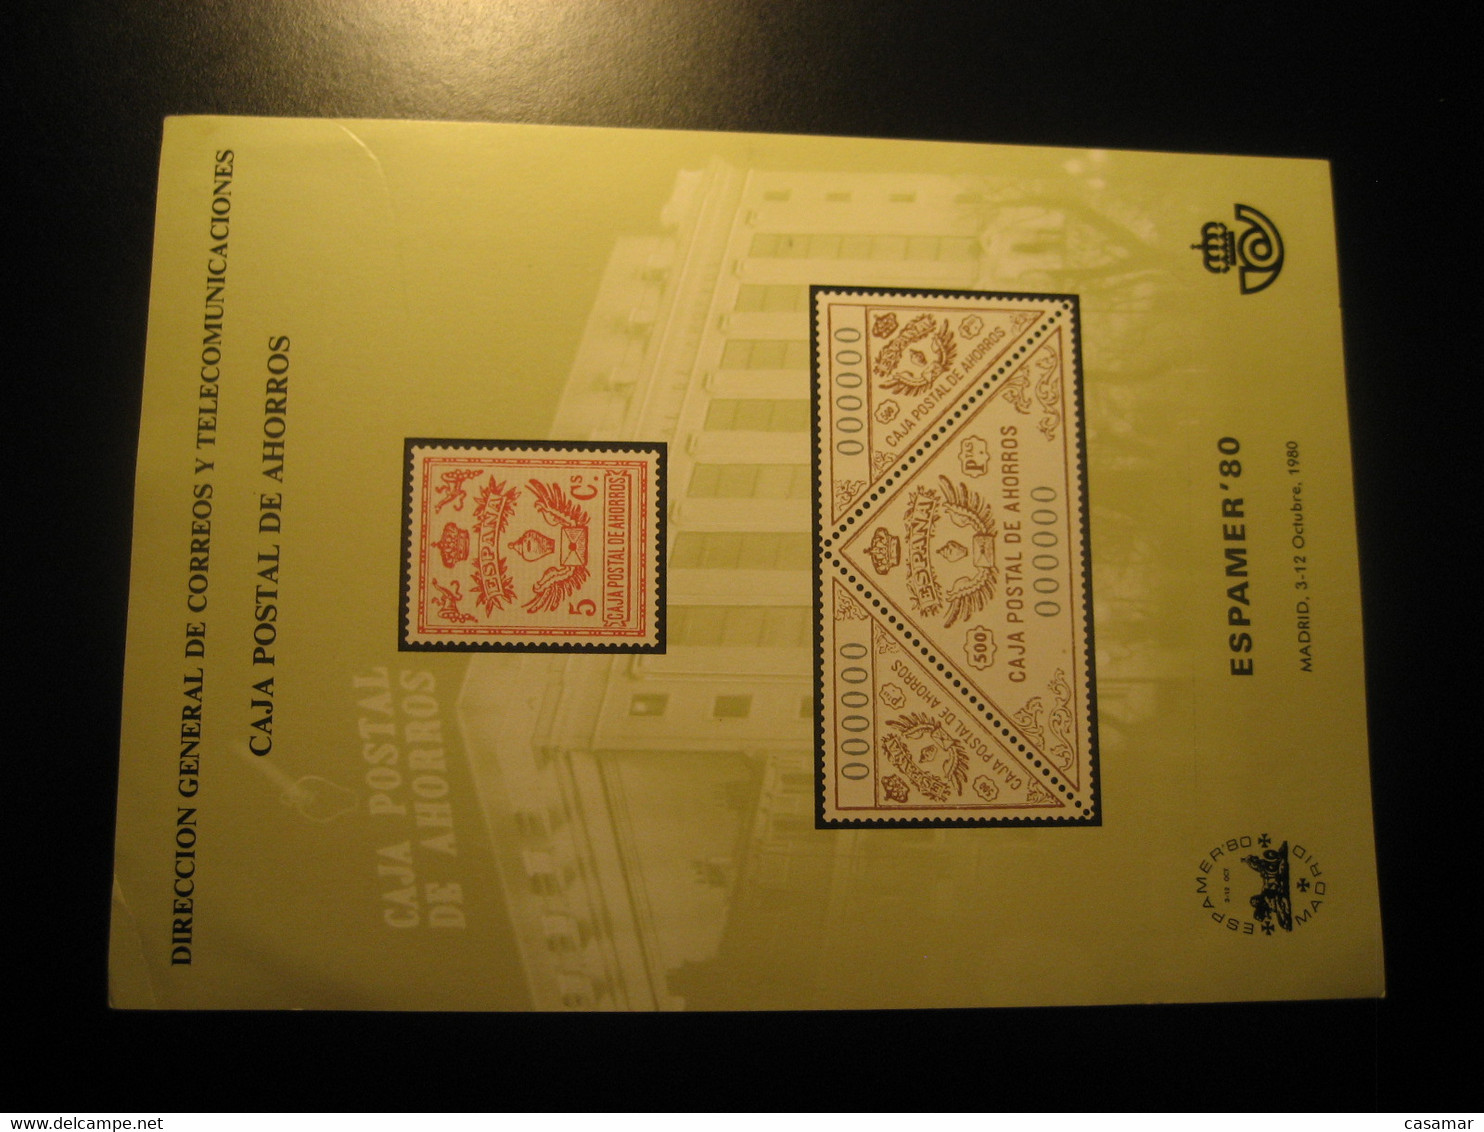 MADRID 1980 Espamer Caja Postal De Ahorros Slight Damaged Big Bloc Card Proof SPAIN Document - Ensayos & Reimpresiones